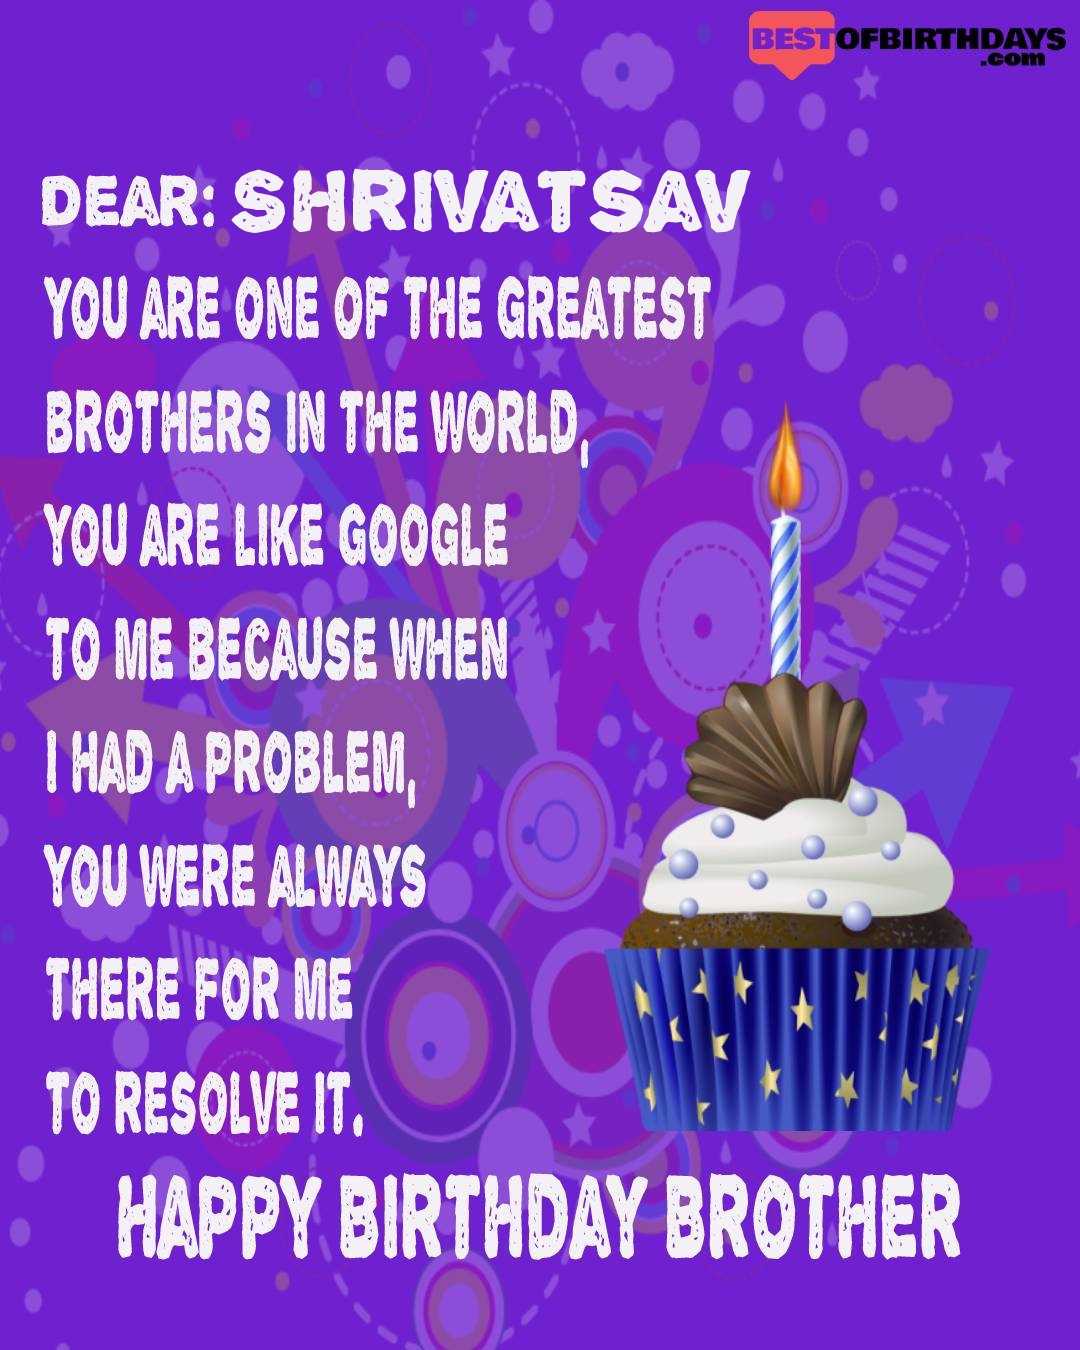 Happy birthday shrivatsav bhai brother bro